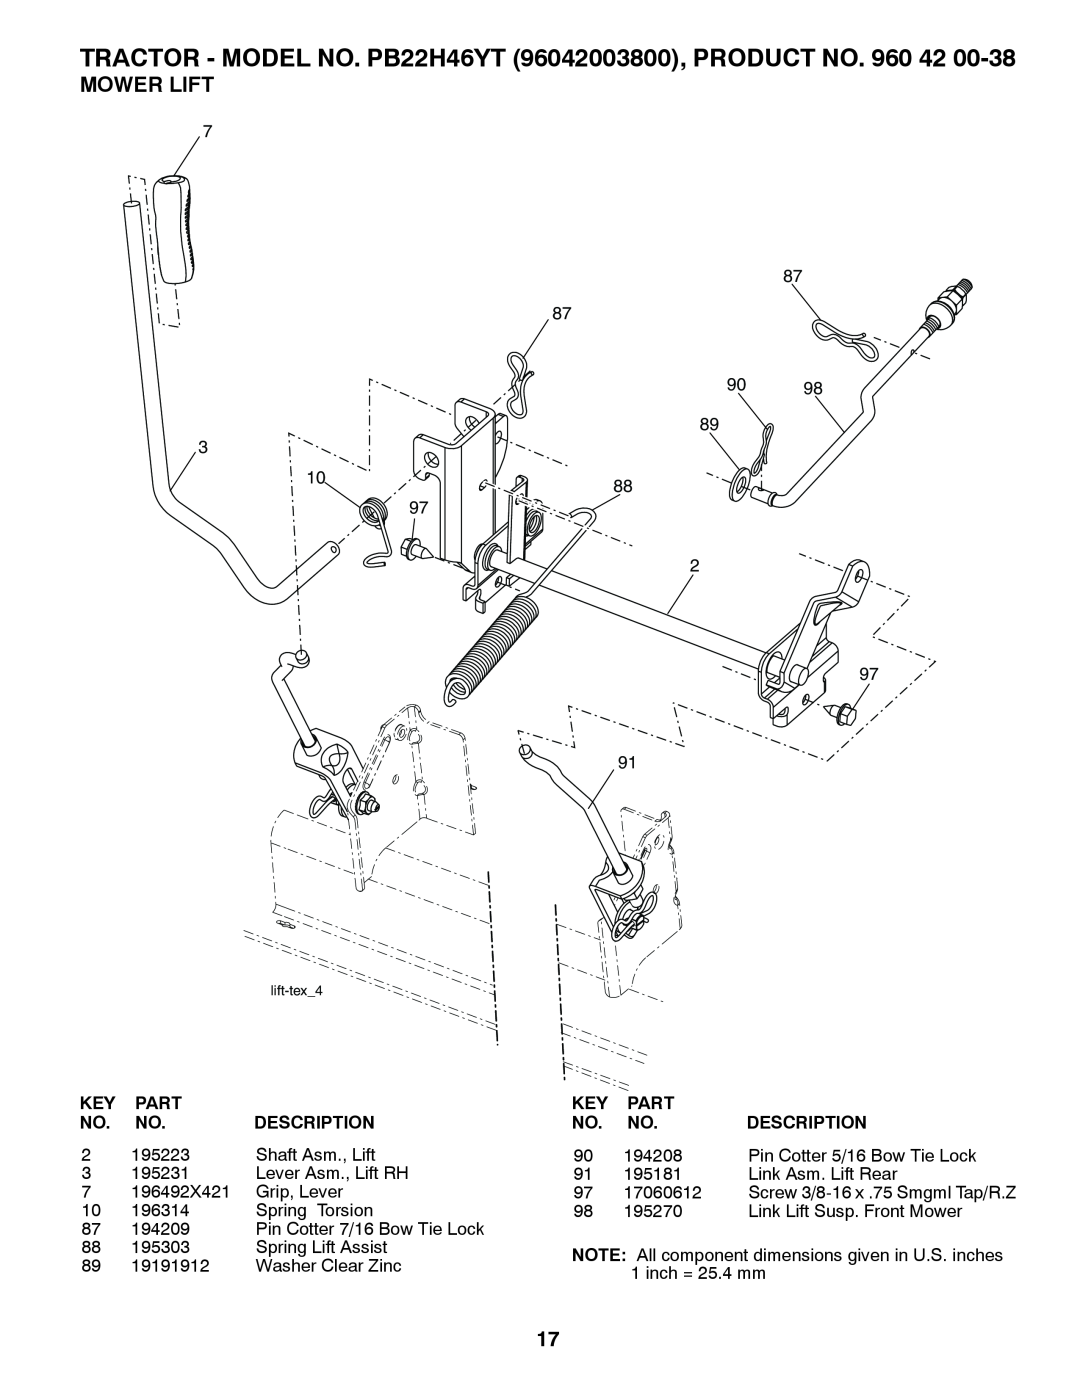 Poulan manual Mower Lift, TRACTOR - MODEL NO. PB22H46YT 96042003800, PRODUCT NO. 960 42, Part, Description 